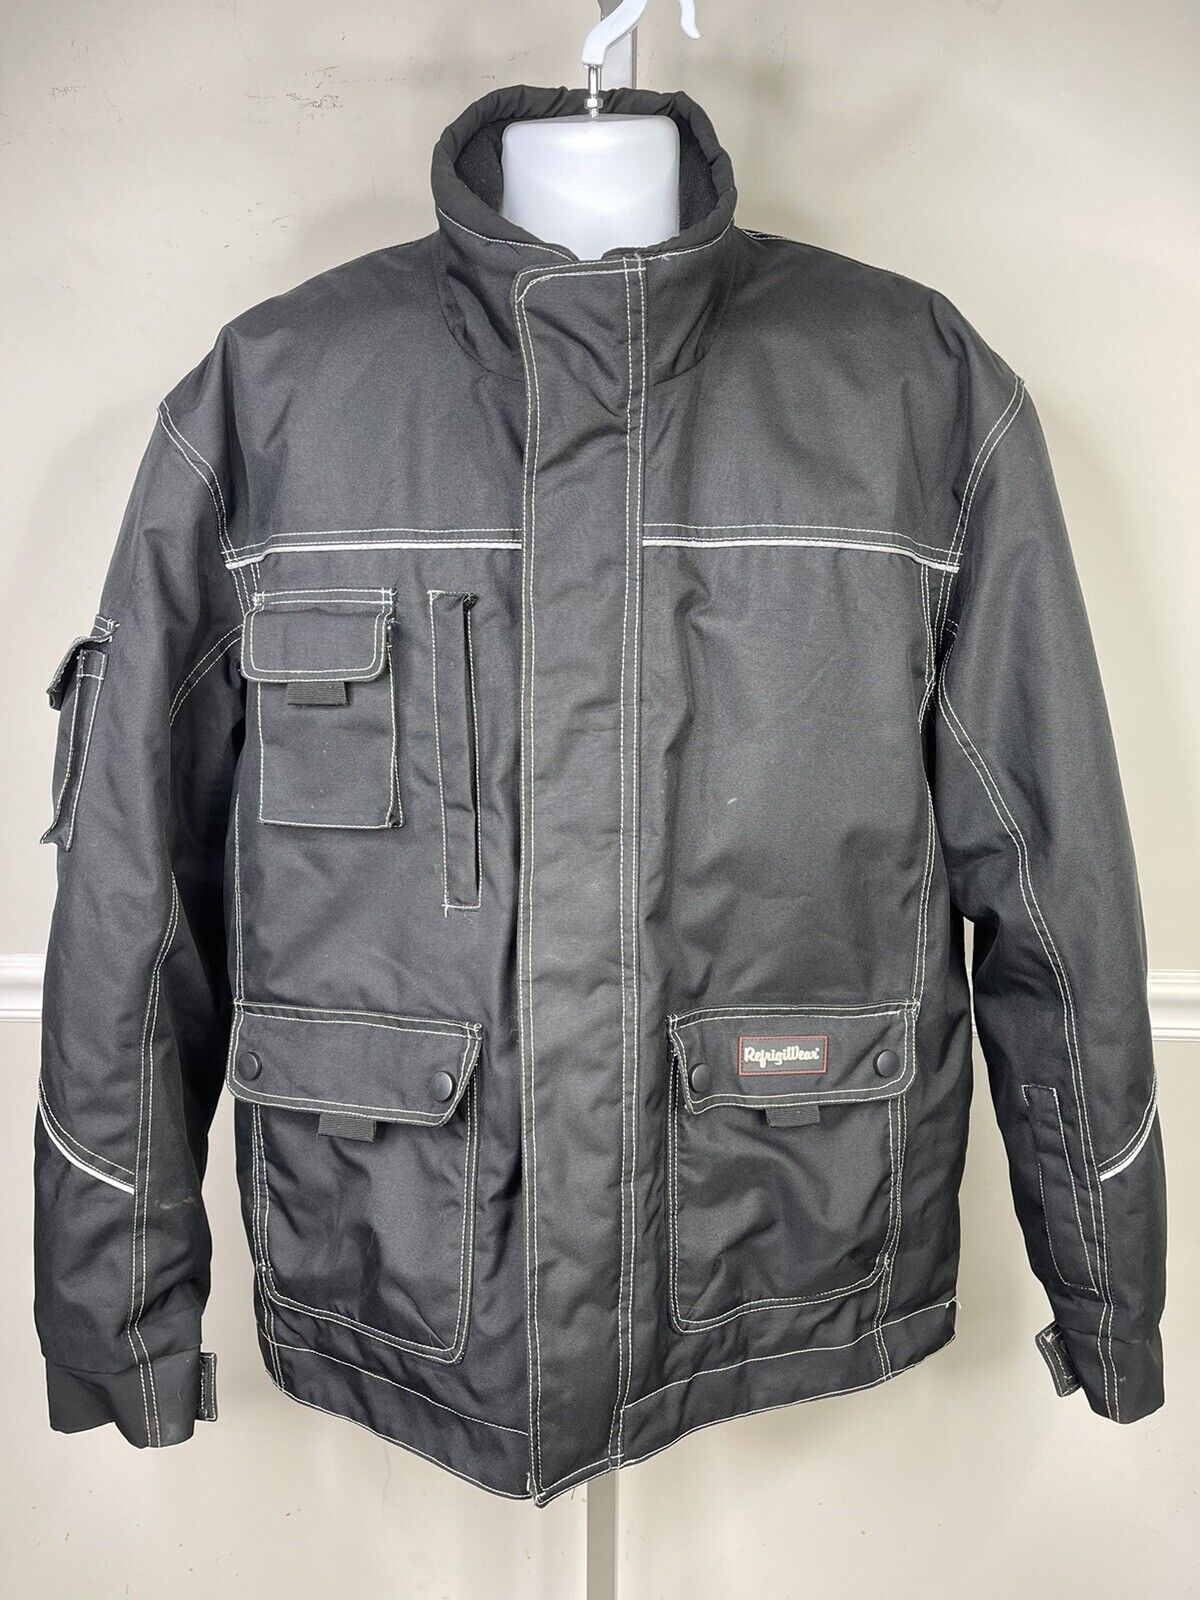 Refrigiwear 8042  Jacket Men’s  Black Xl Coat  Lots Of Pockets Work  Ergoforce